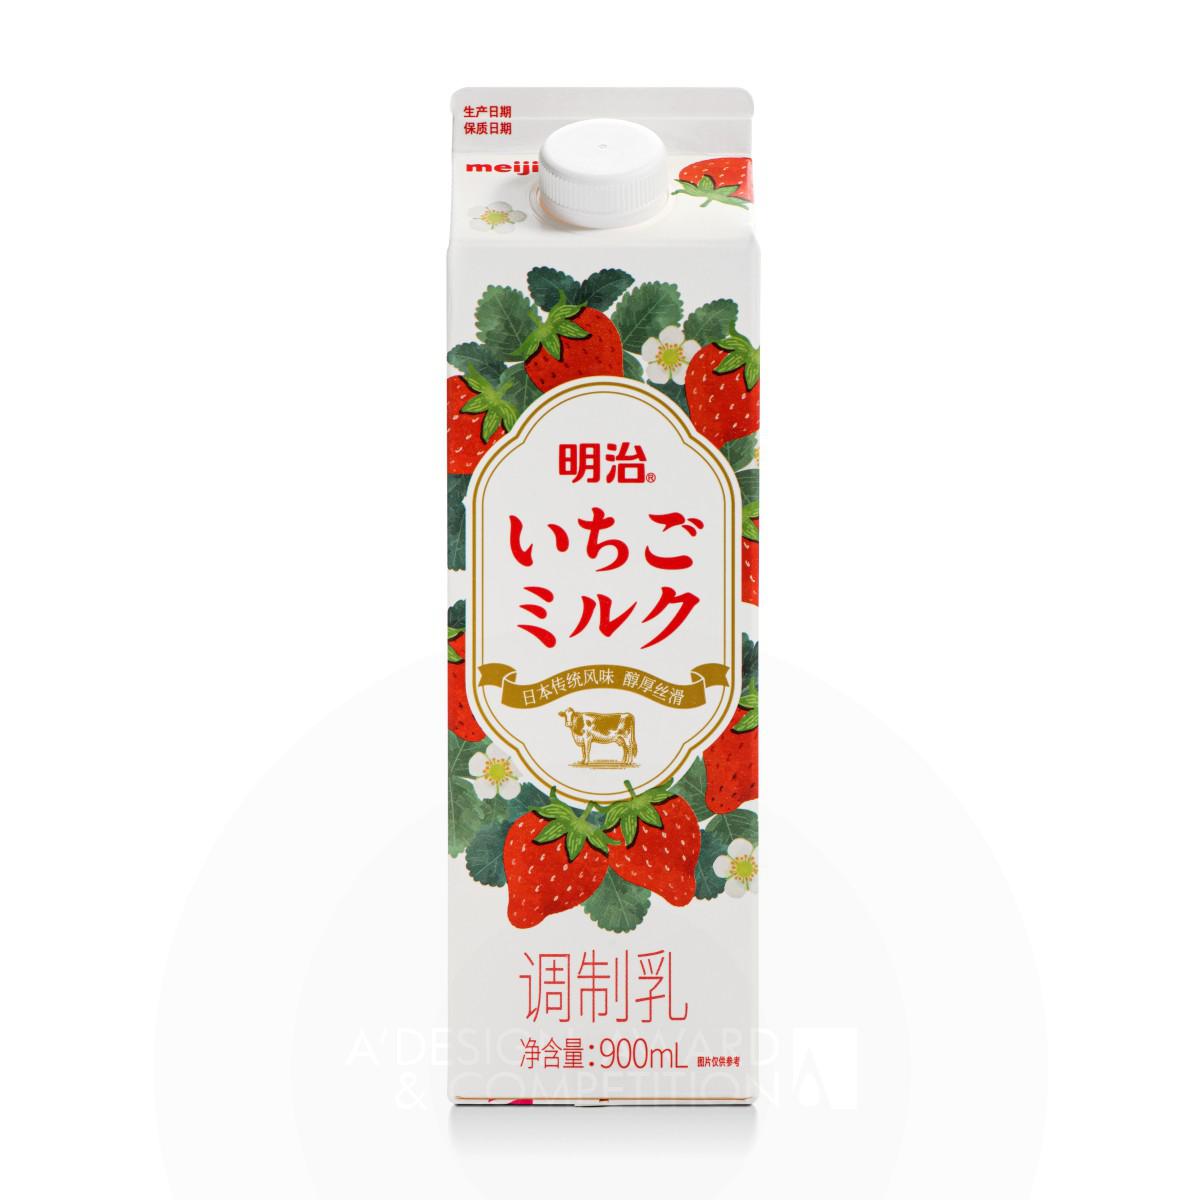 Chilled Milk Packaging by Kazuo Fukushima and Aya Tanaka Bronze Packaging Design Award Winner 2024 